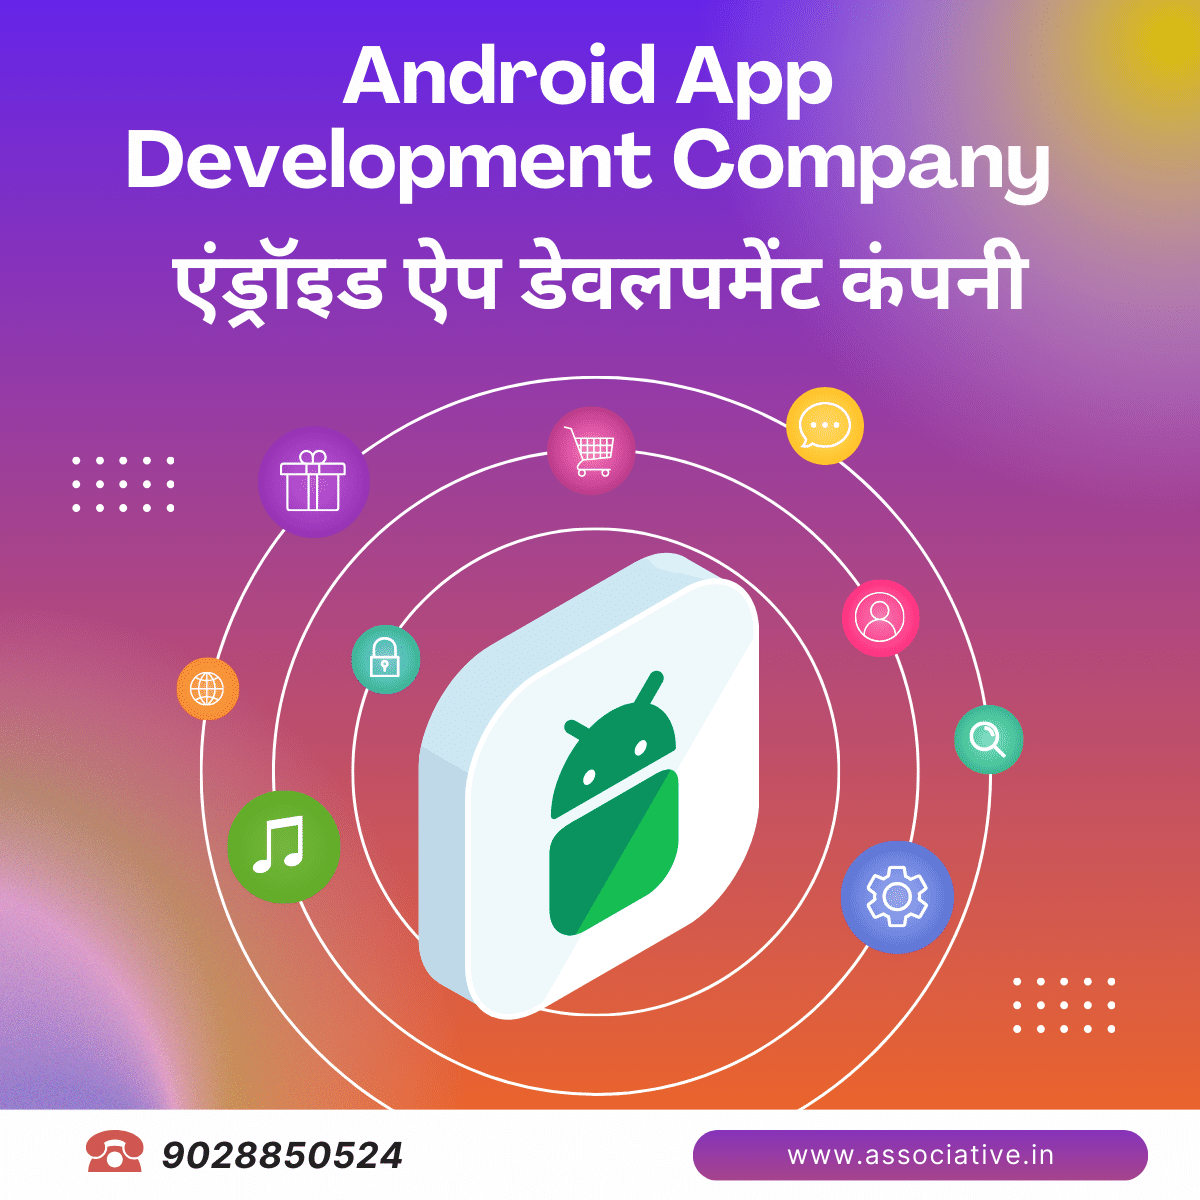 Android App Development Company

एंड्रॉइड ऐप डेवलपमेंट कंपनी